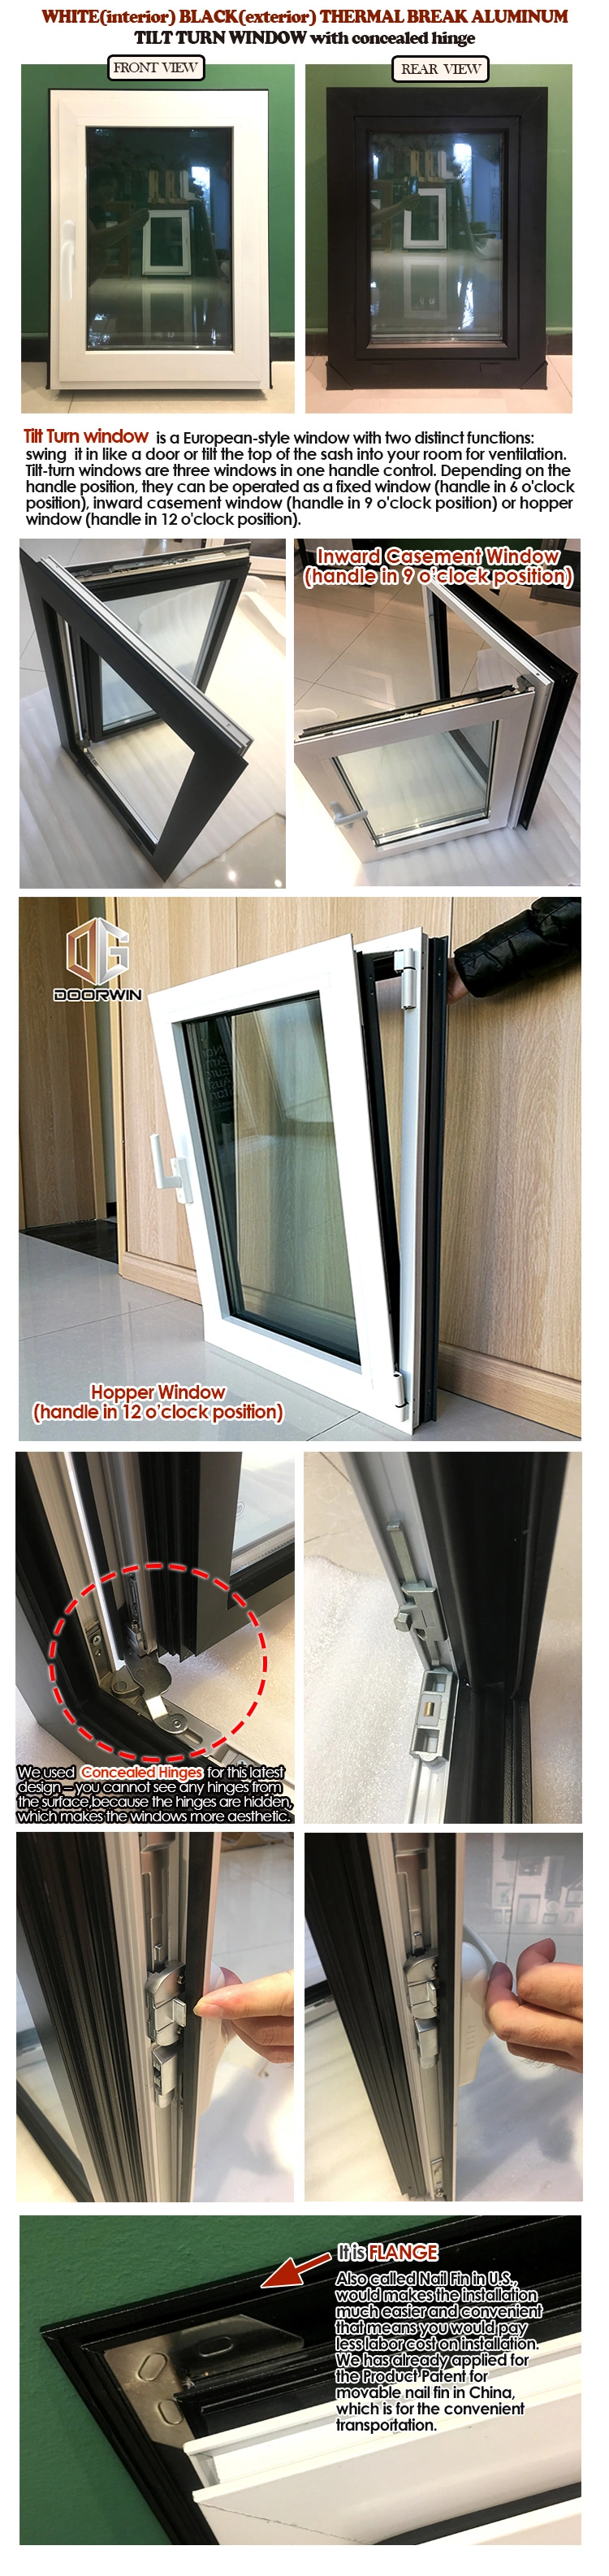 America Nfrc Standard Low-E Glass Radiation Protection White Color Aluminium Glass Windows for Aruba Customer